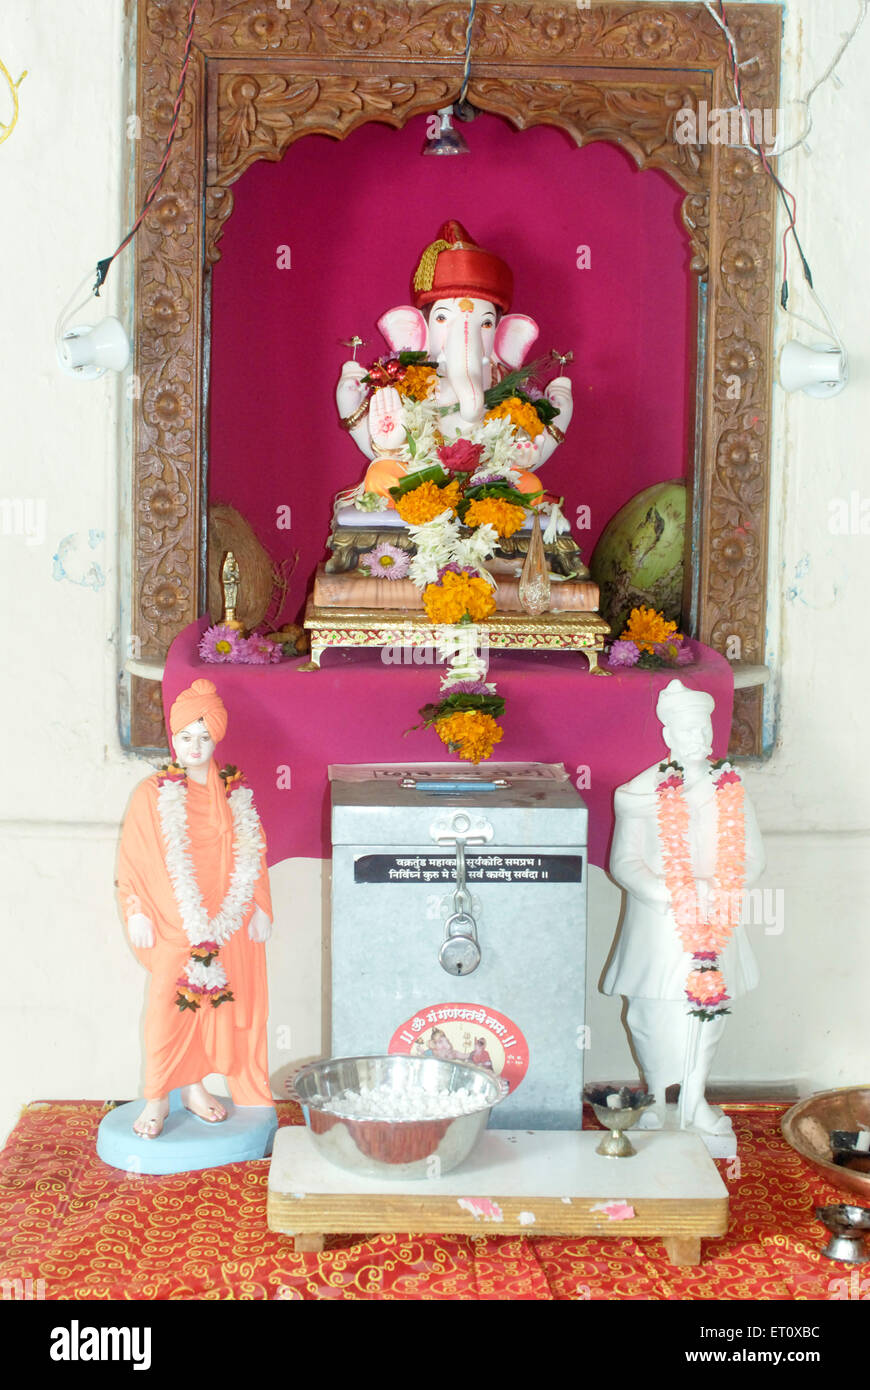 First idol of Lord Ganesh established by Lokmanya Tilak 1894 at Sardar Vinchurkar Wada for celebrating Ganapati festival at Pune Stock Photo